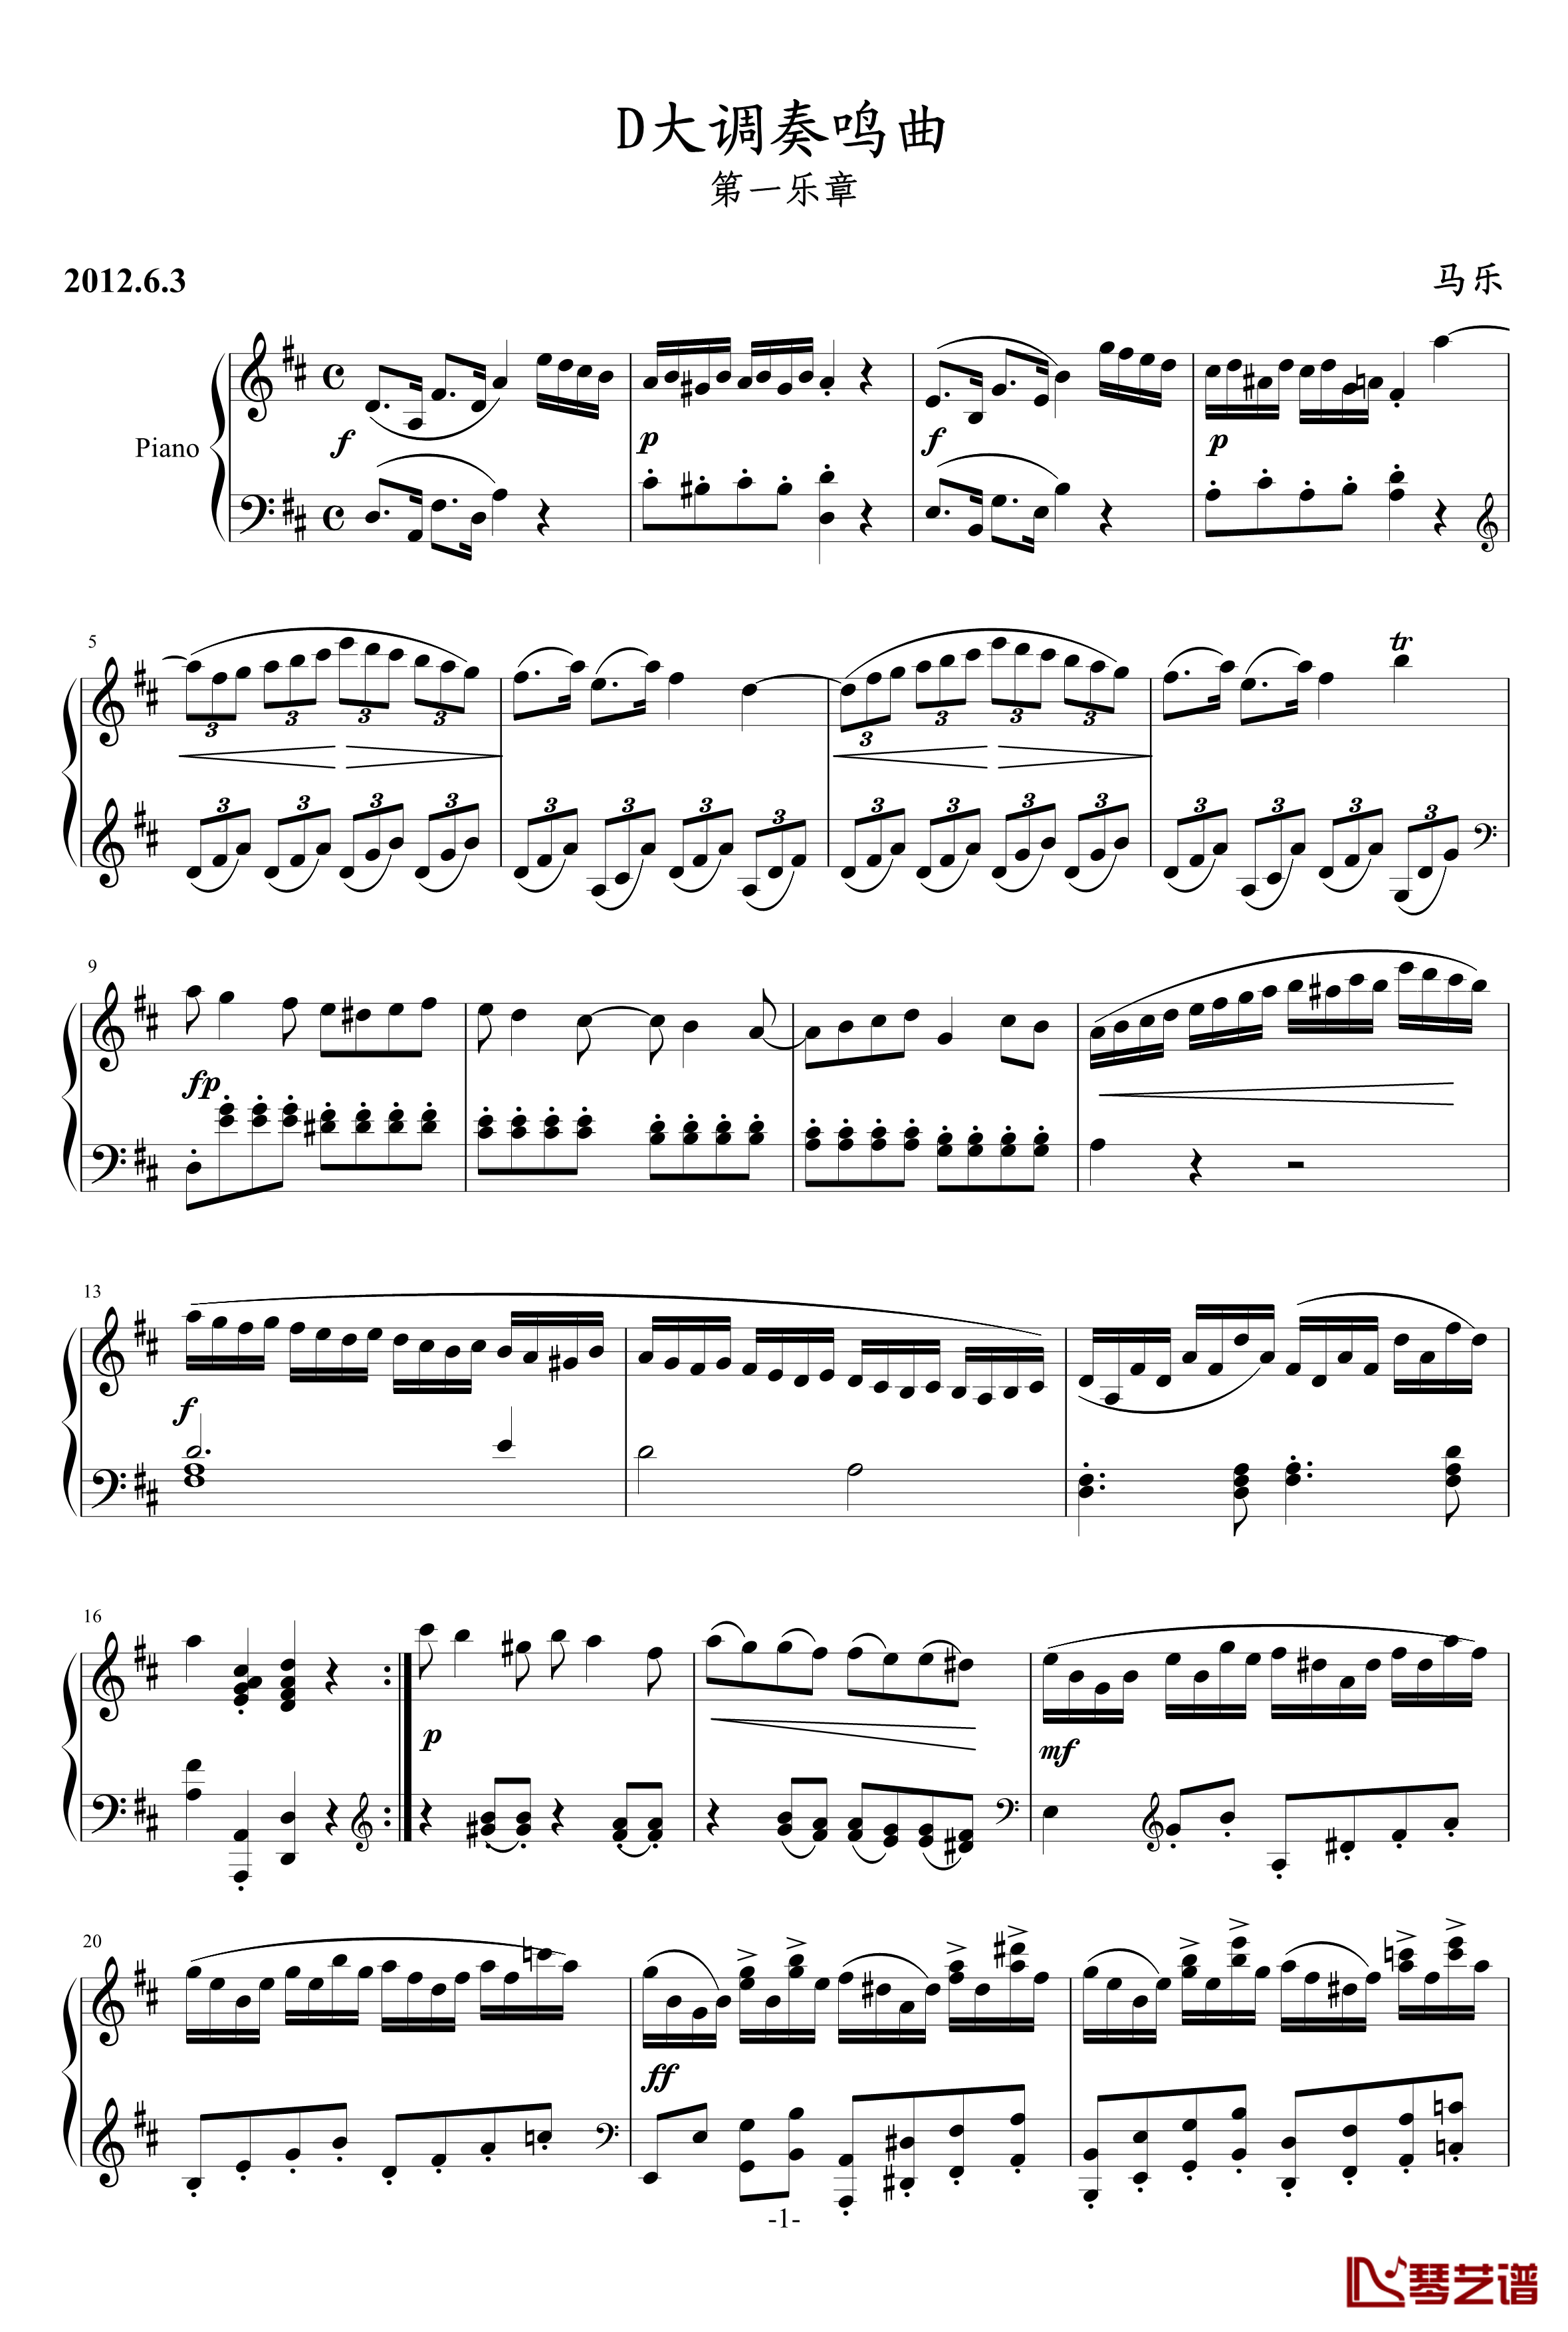 D大调奏鸣曲钢琴谱-第一乐章-乐之琴